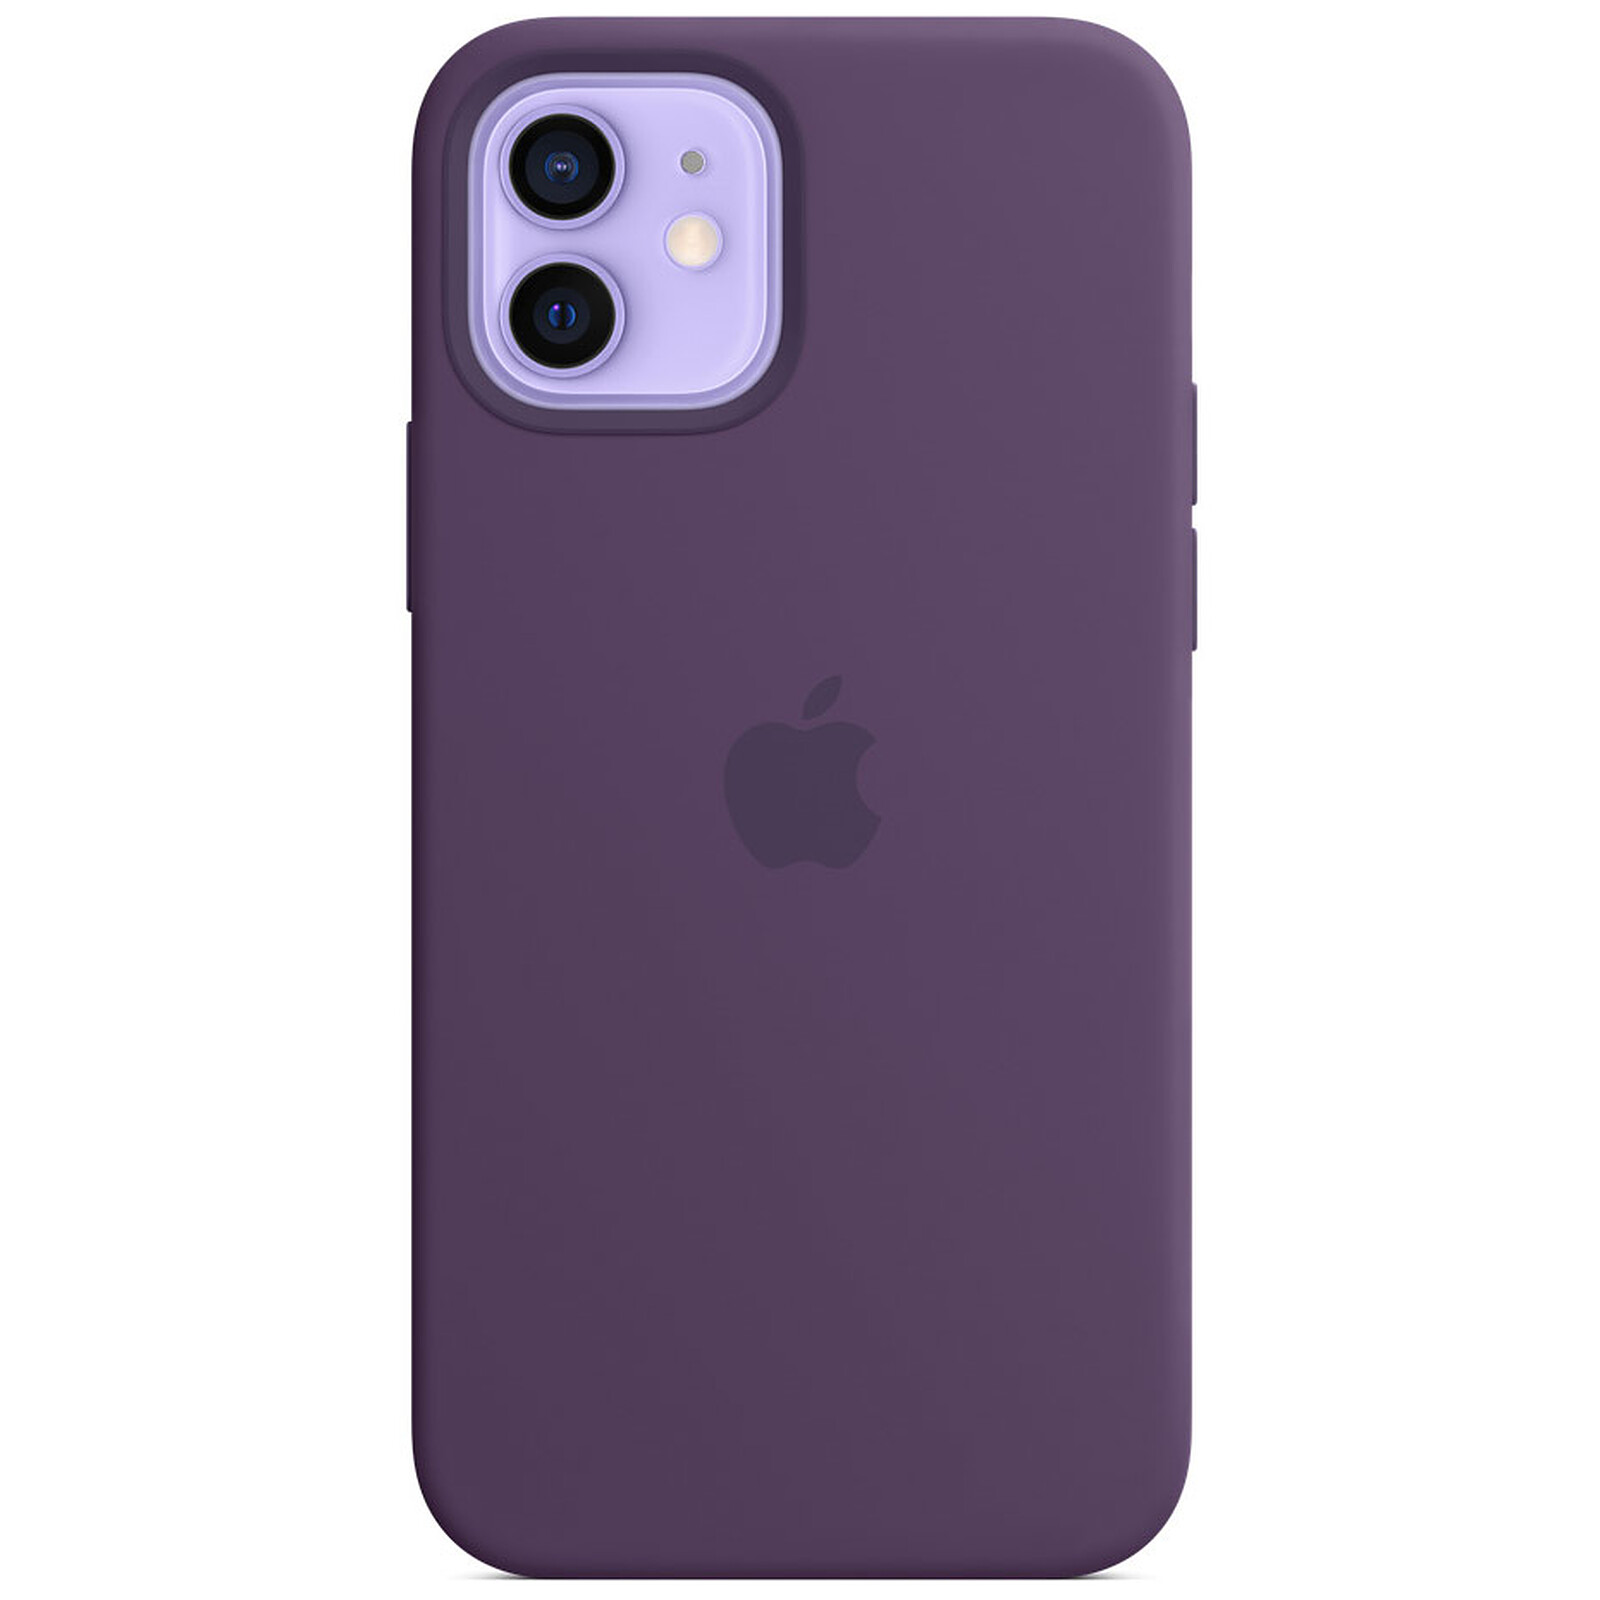 Funda de silicona iPhone 12 Pro Max (morado claro) 